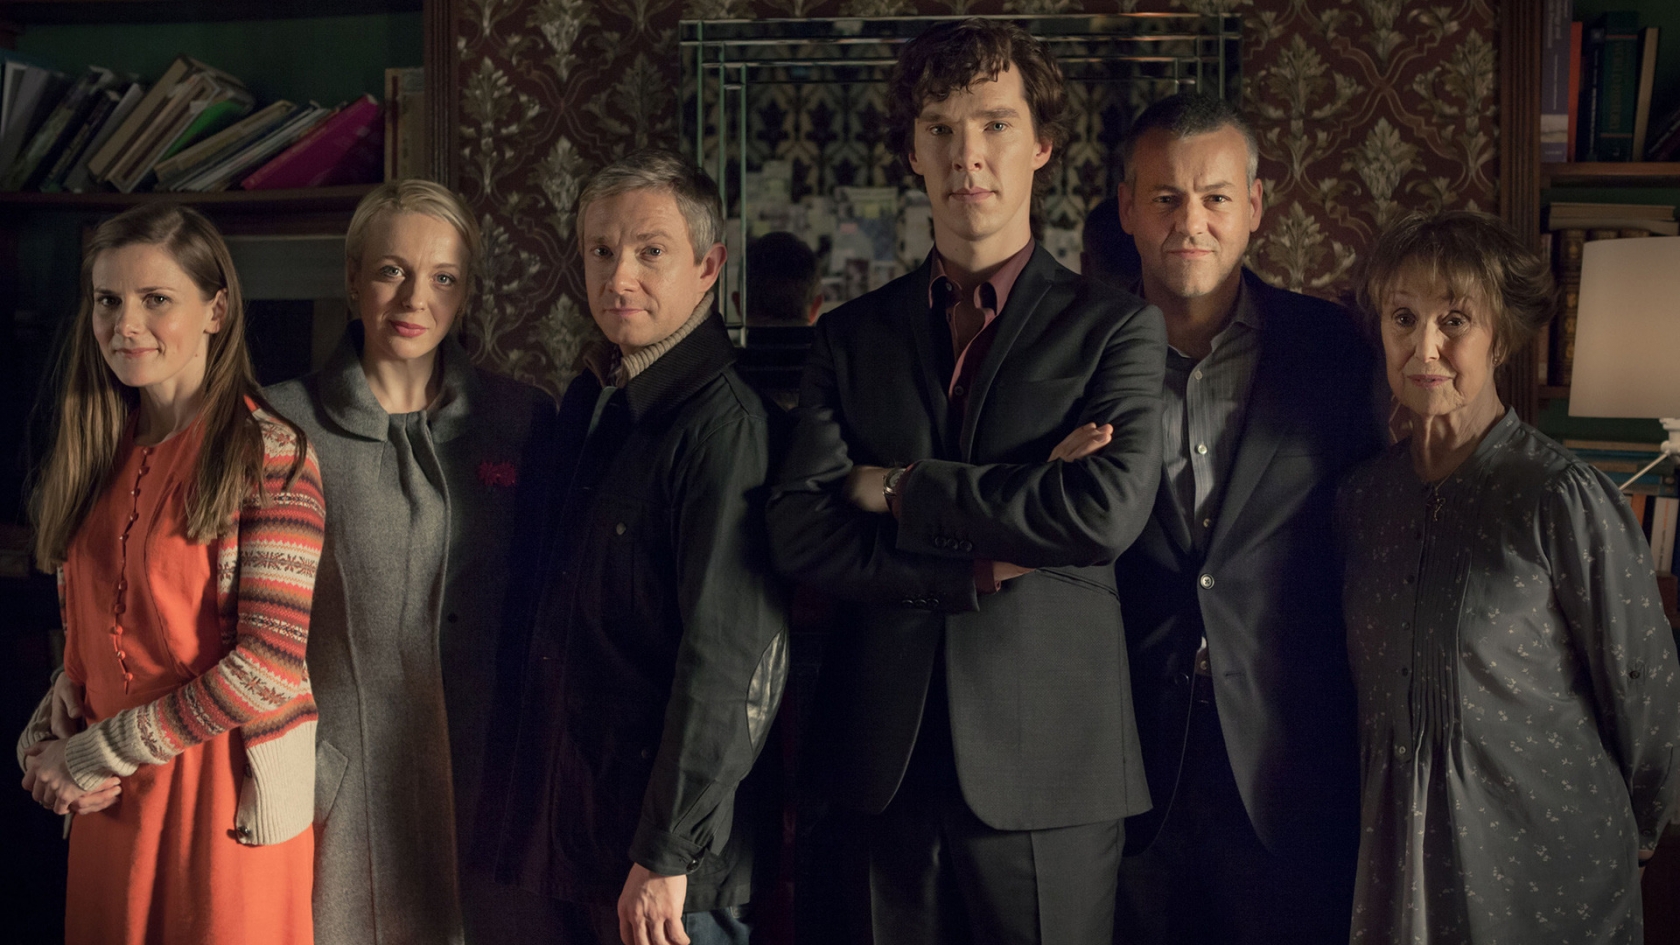 BBC Sherlock Cast for 1680 x 945 HDTV resolution